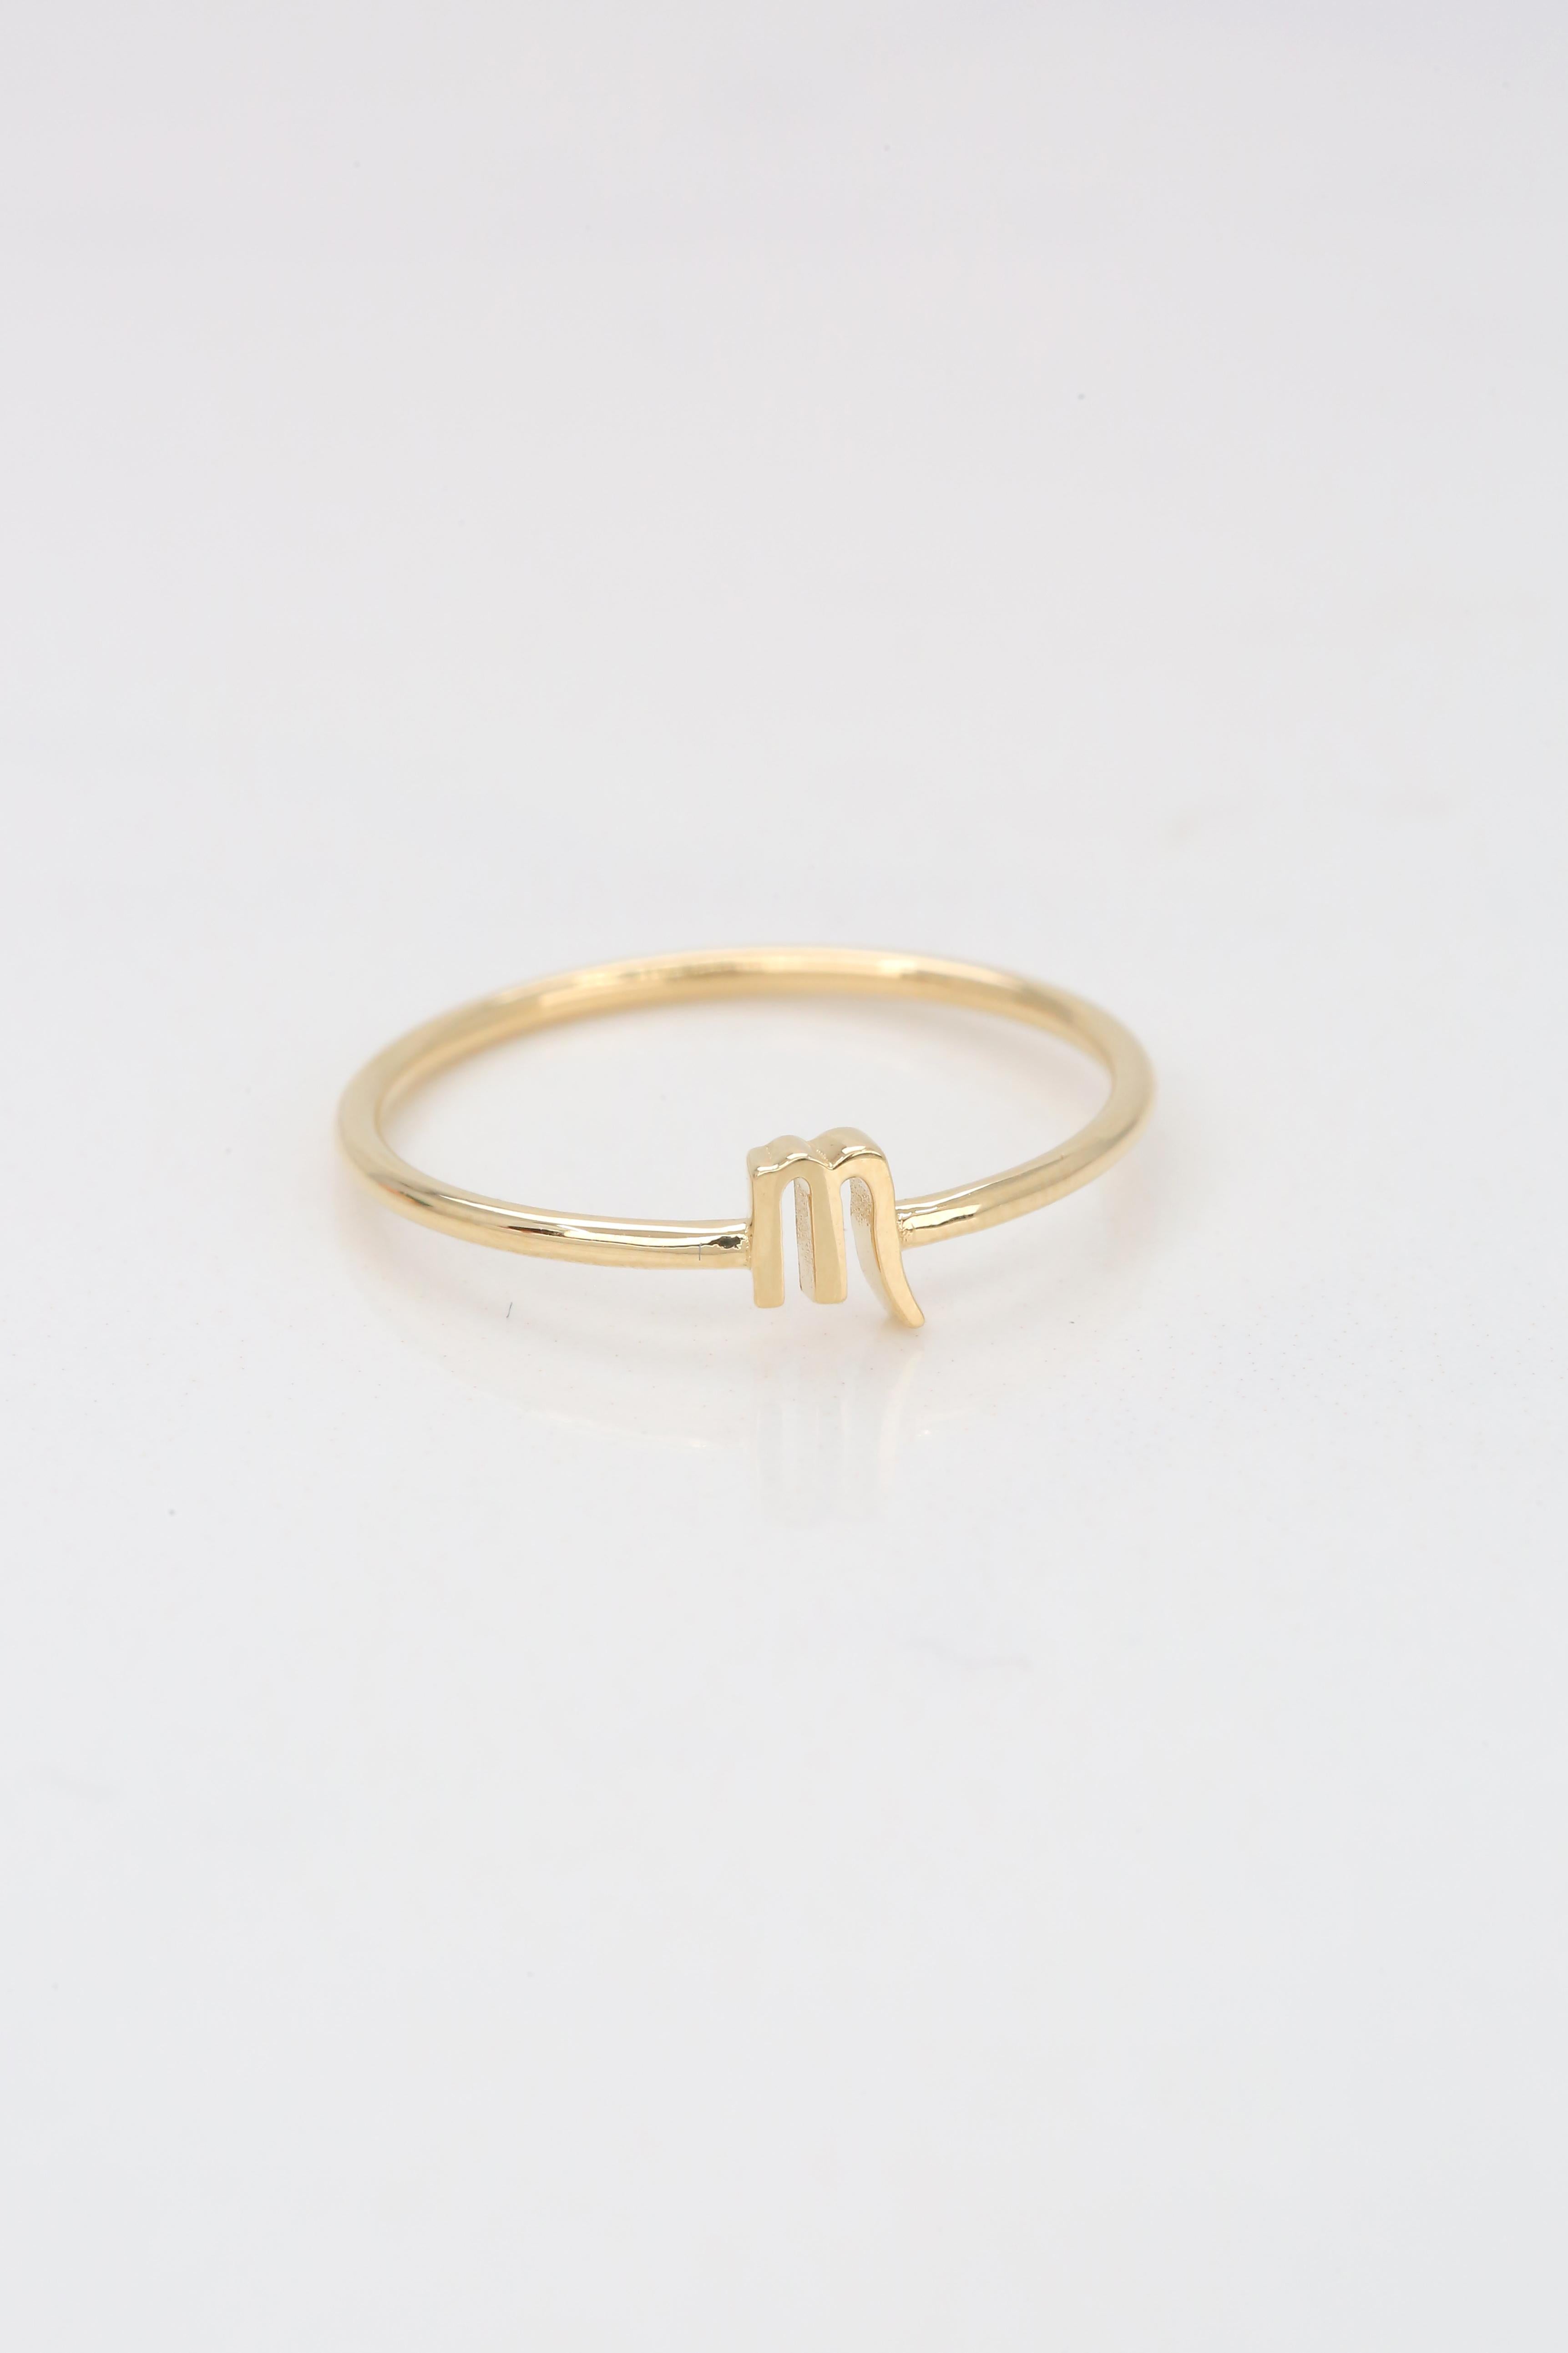 For Sale:  14K Gold Scorpio Ring, Scorpio Sign Gold Ring 5